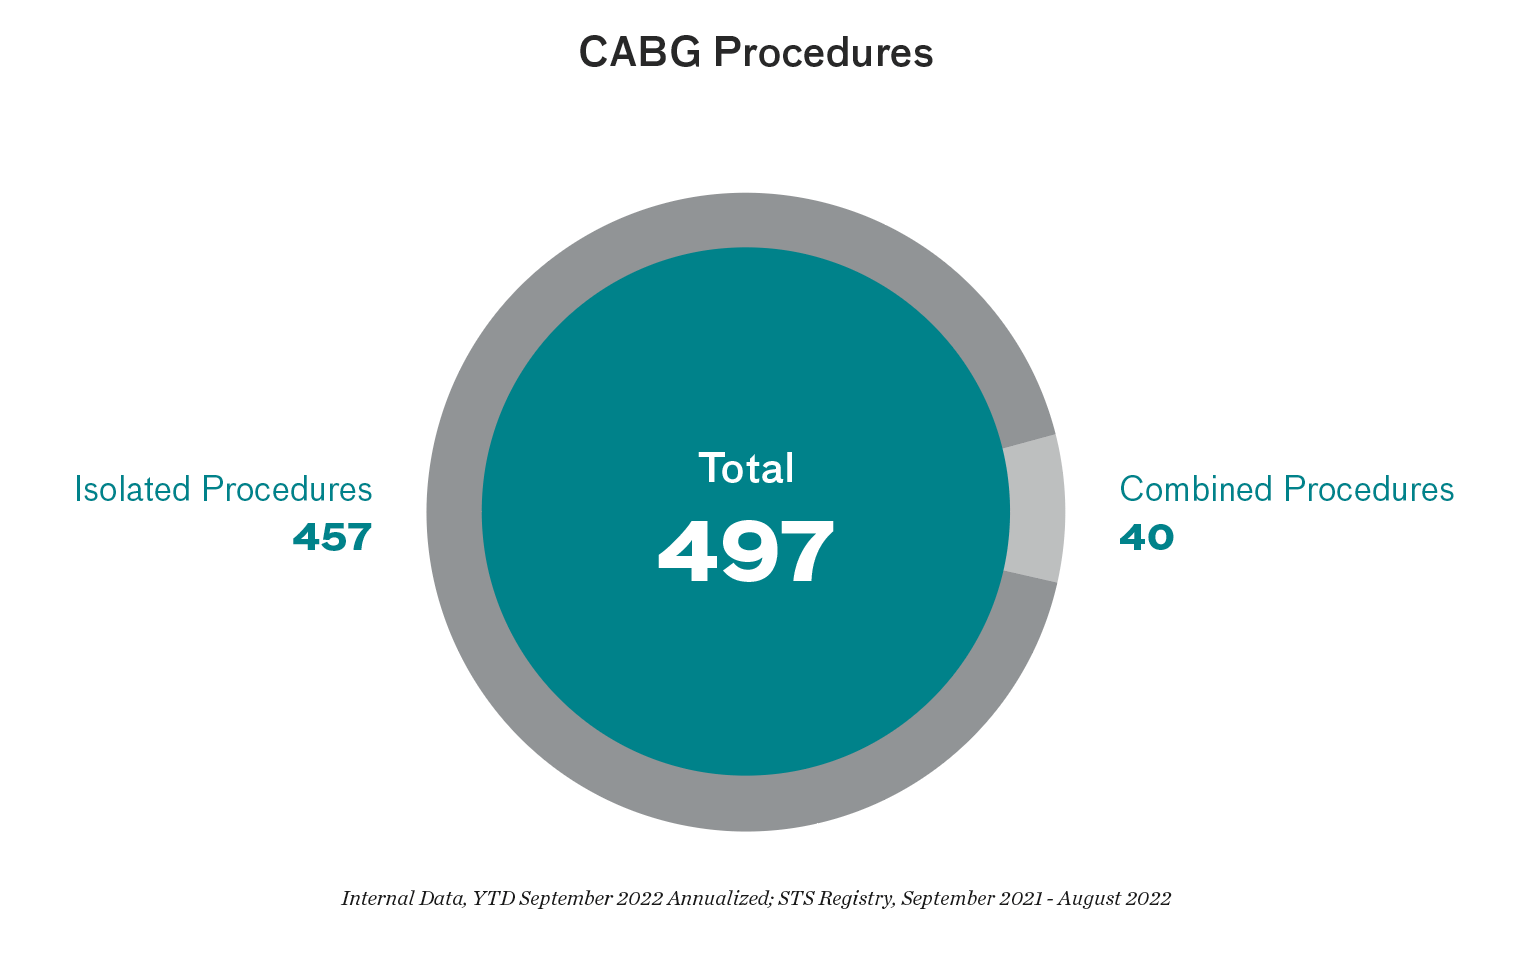 CABG Procedures - Total 497, including 459 isolated procedures and 40 combined procedures.  